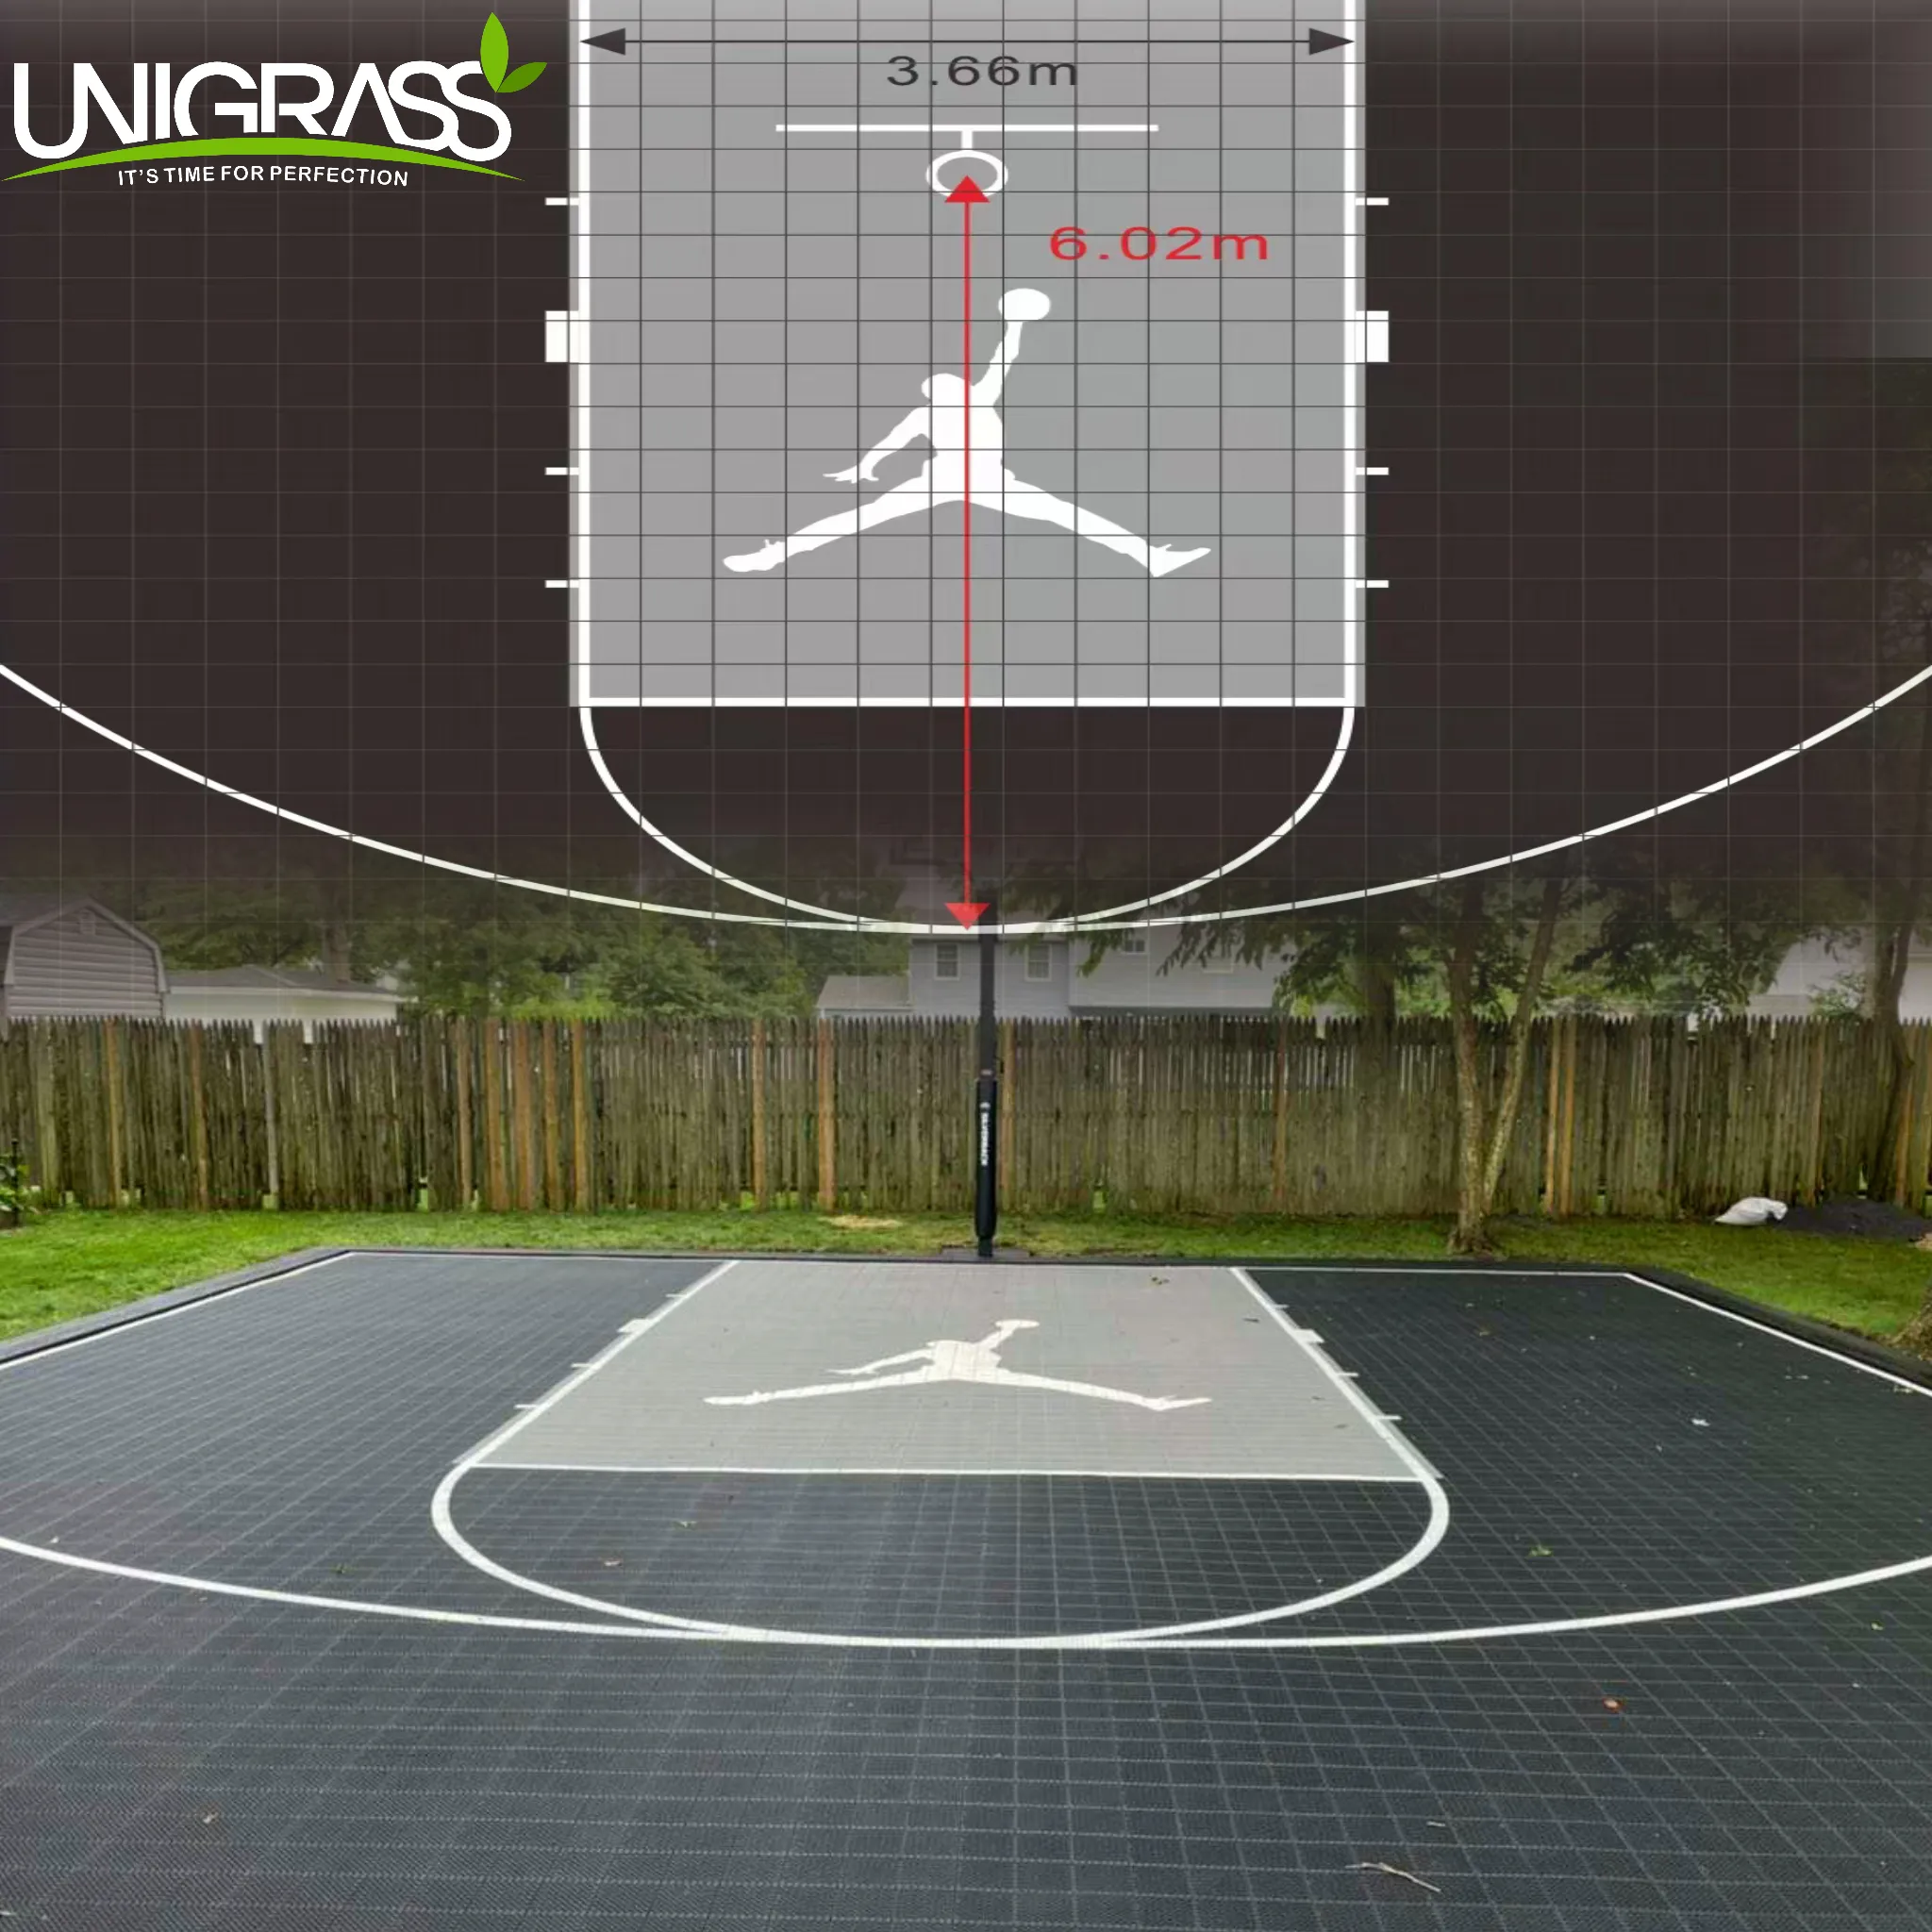 UNIPpインターロッキングポータブルスポーツコート素材プラスチックタイル屋外一時バスケットボールバレーボールフローリング